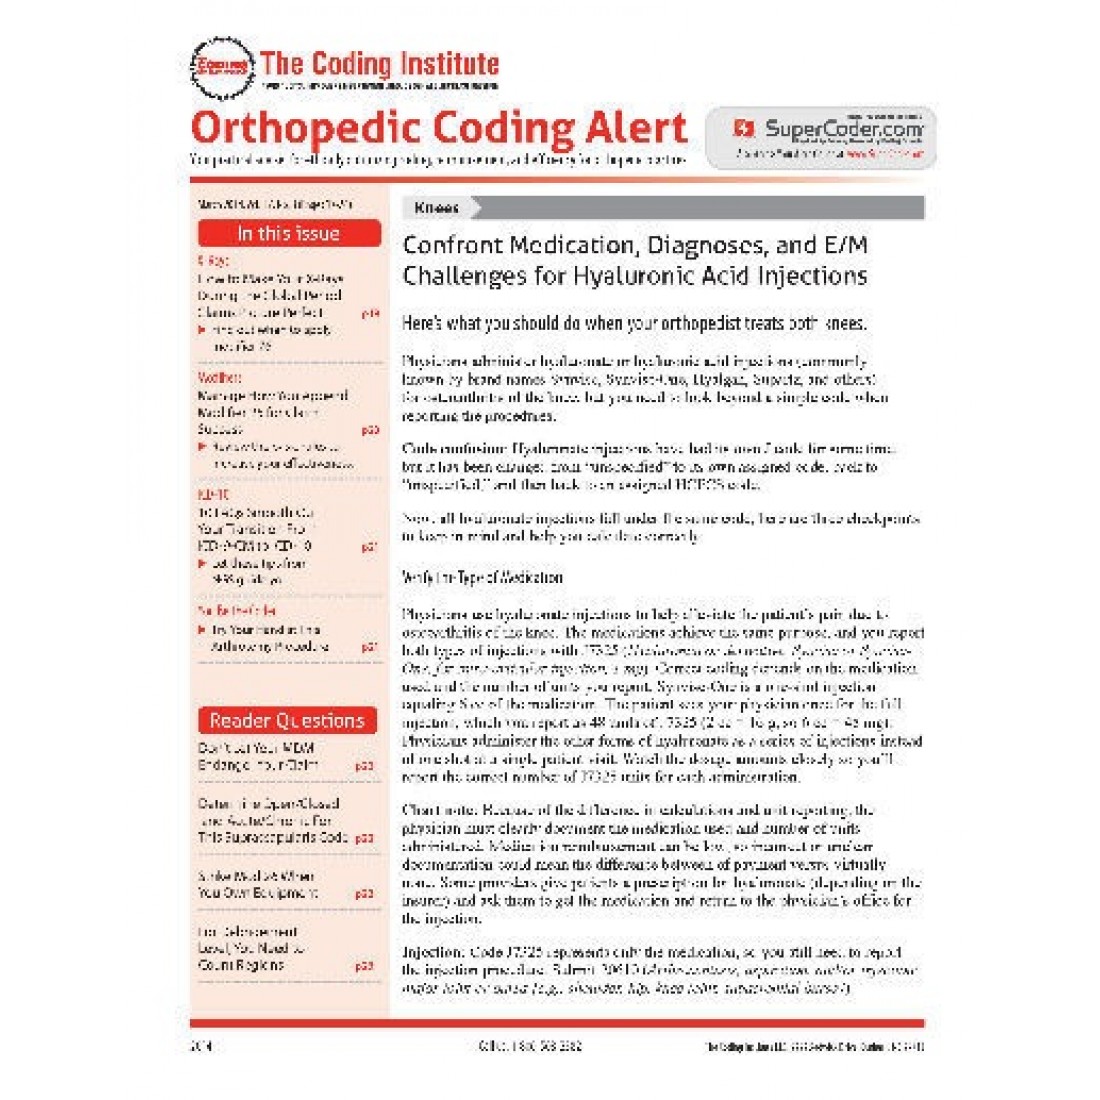 Orthopedic Coding Alert Magazine Subscriber Services